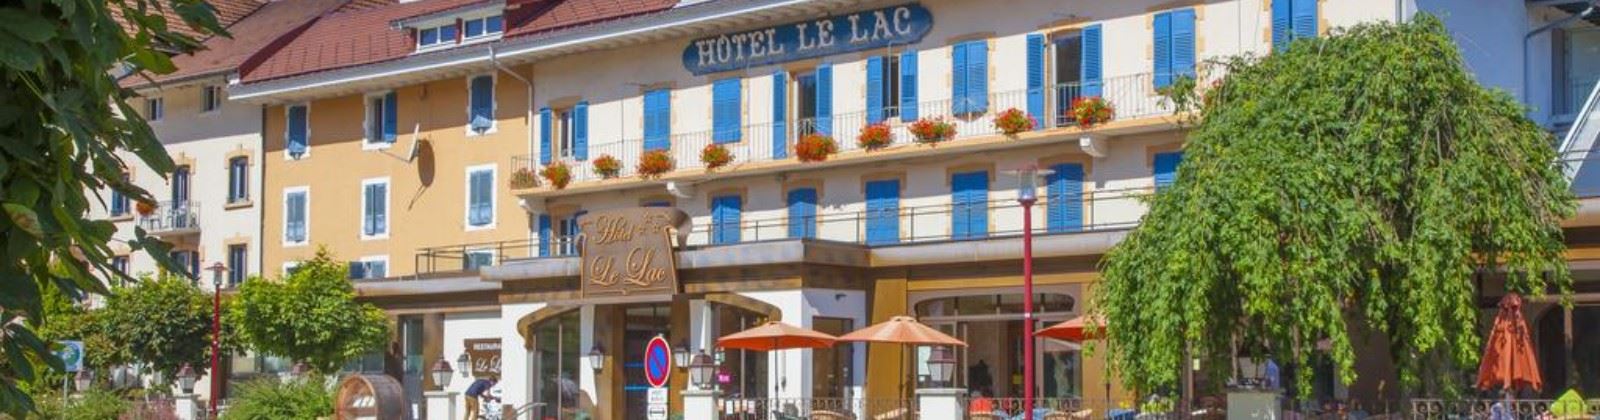 OLEVENE image - hotel-le-lac-olevene-restaurant-seminaire-convention-conference-